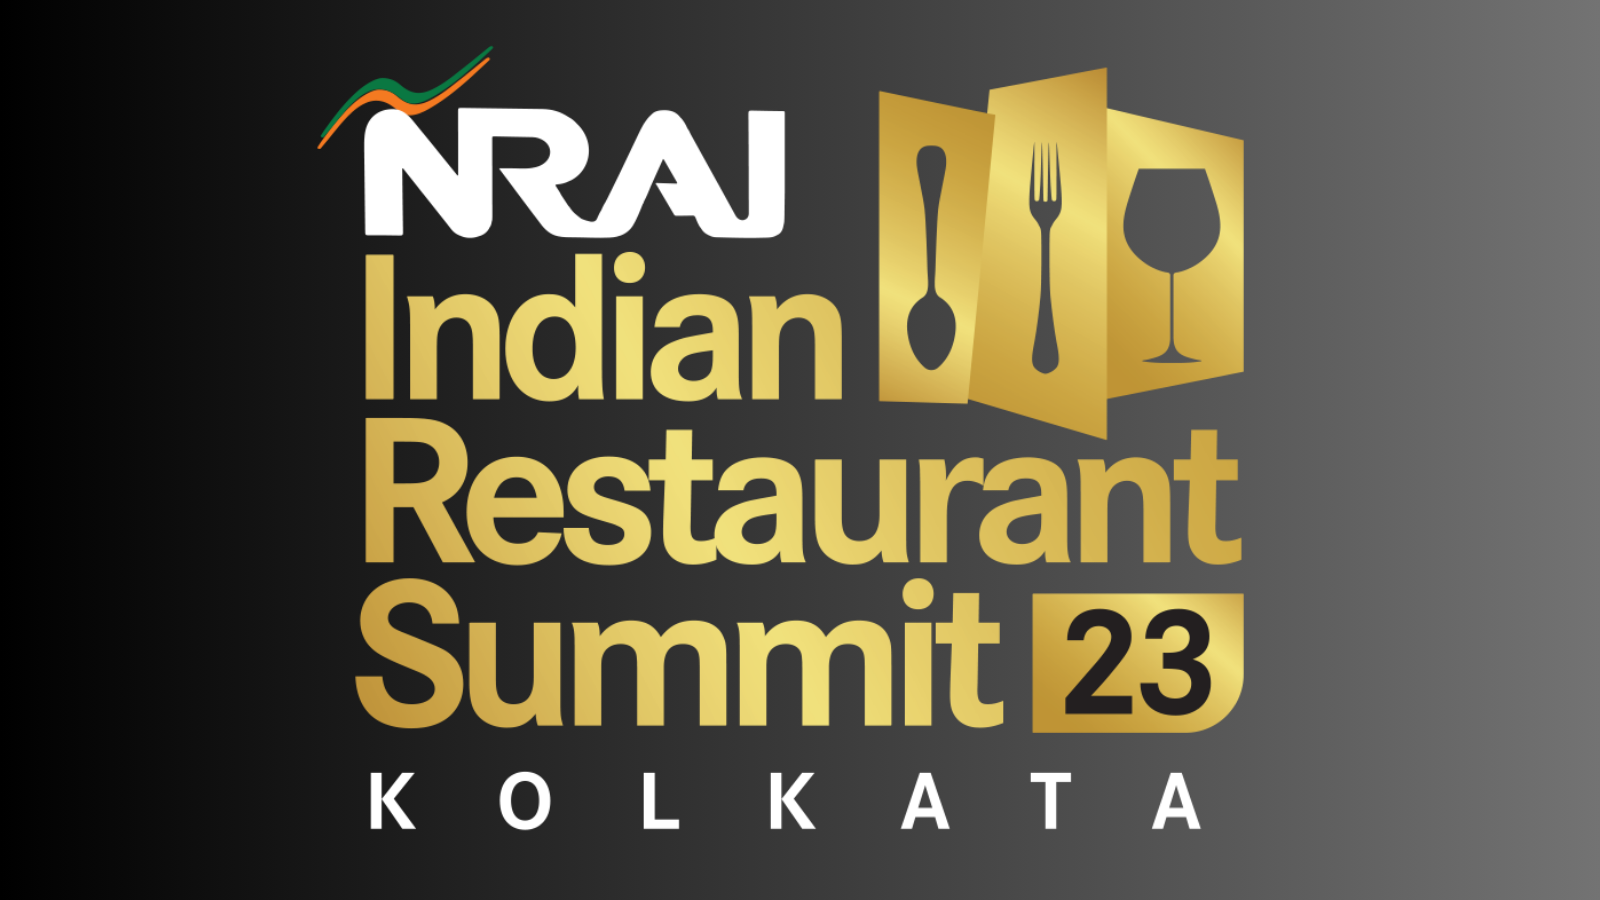 NRAI Indian Restaurant Summit